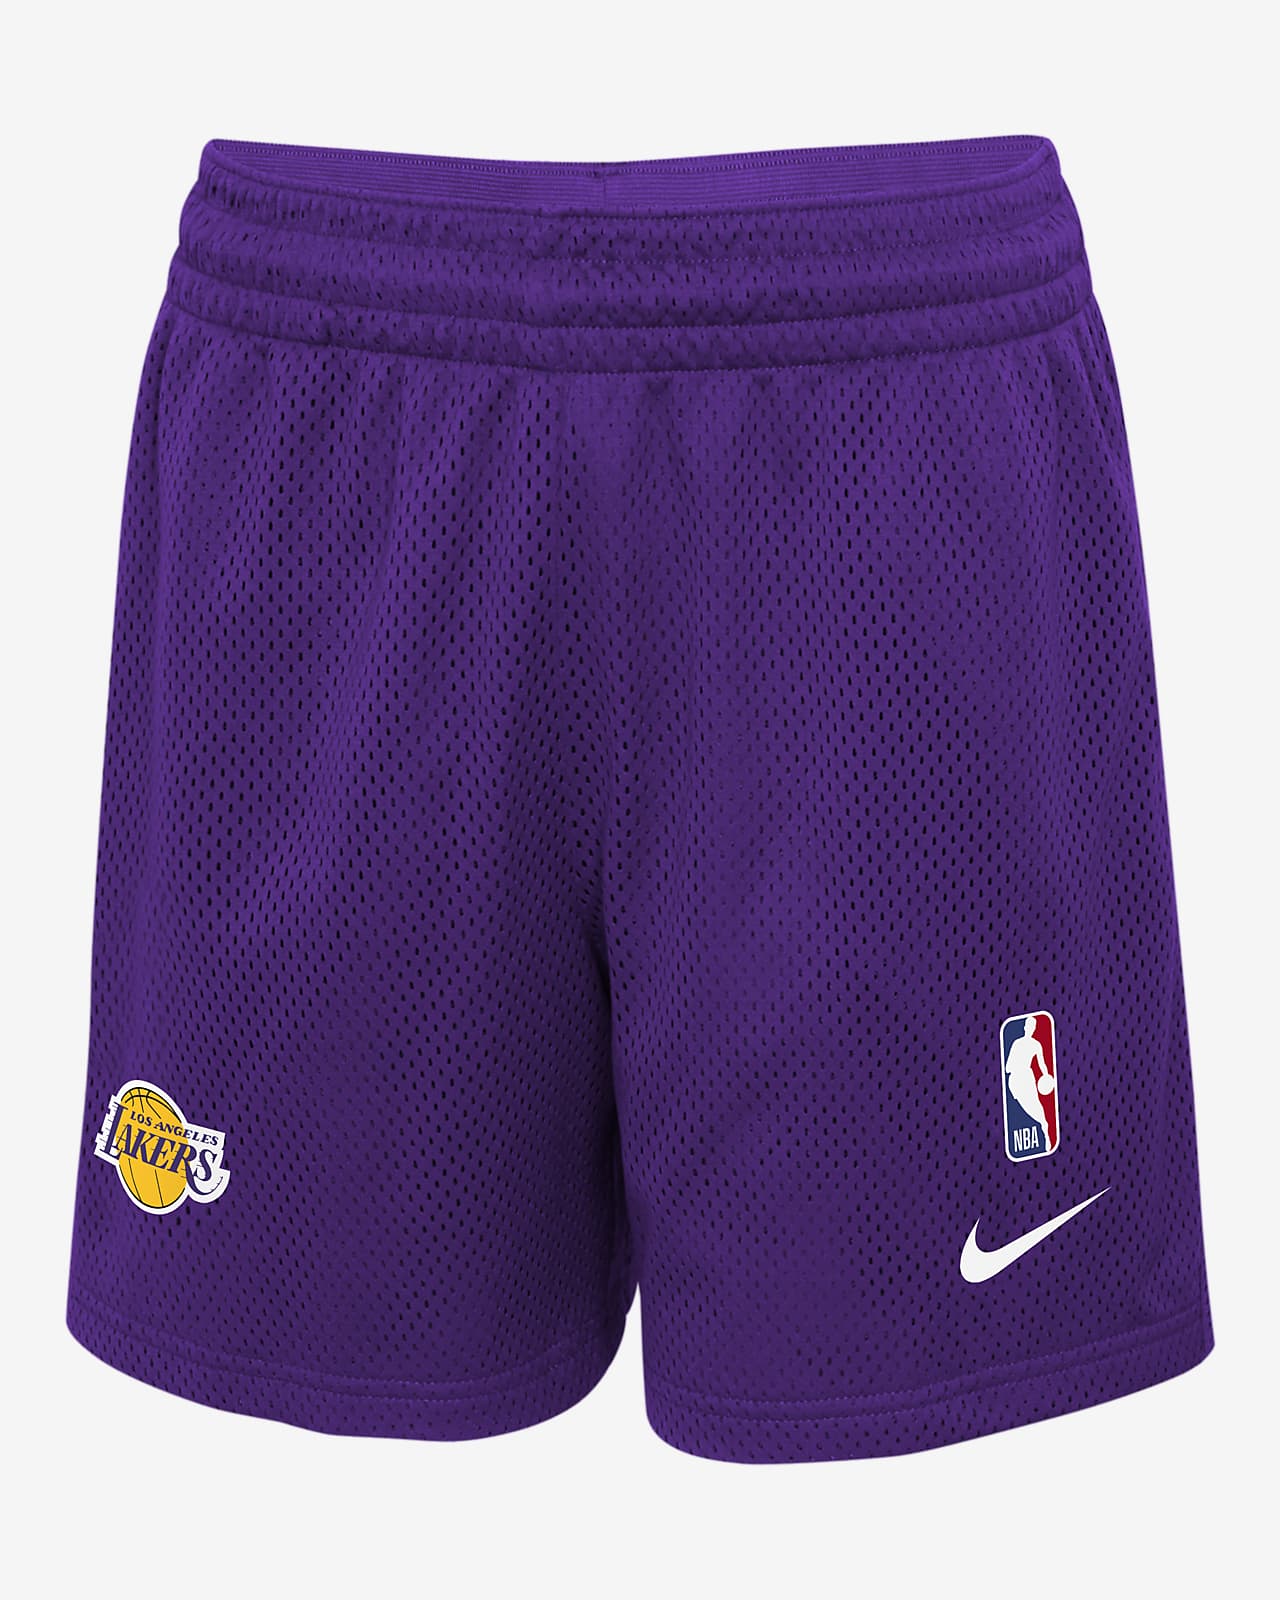 Los Angeles Lakers Nike NBA-Spielershorts für ältere Kinder